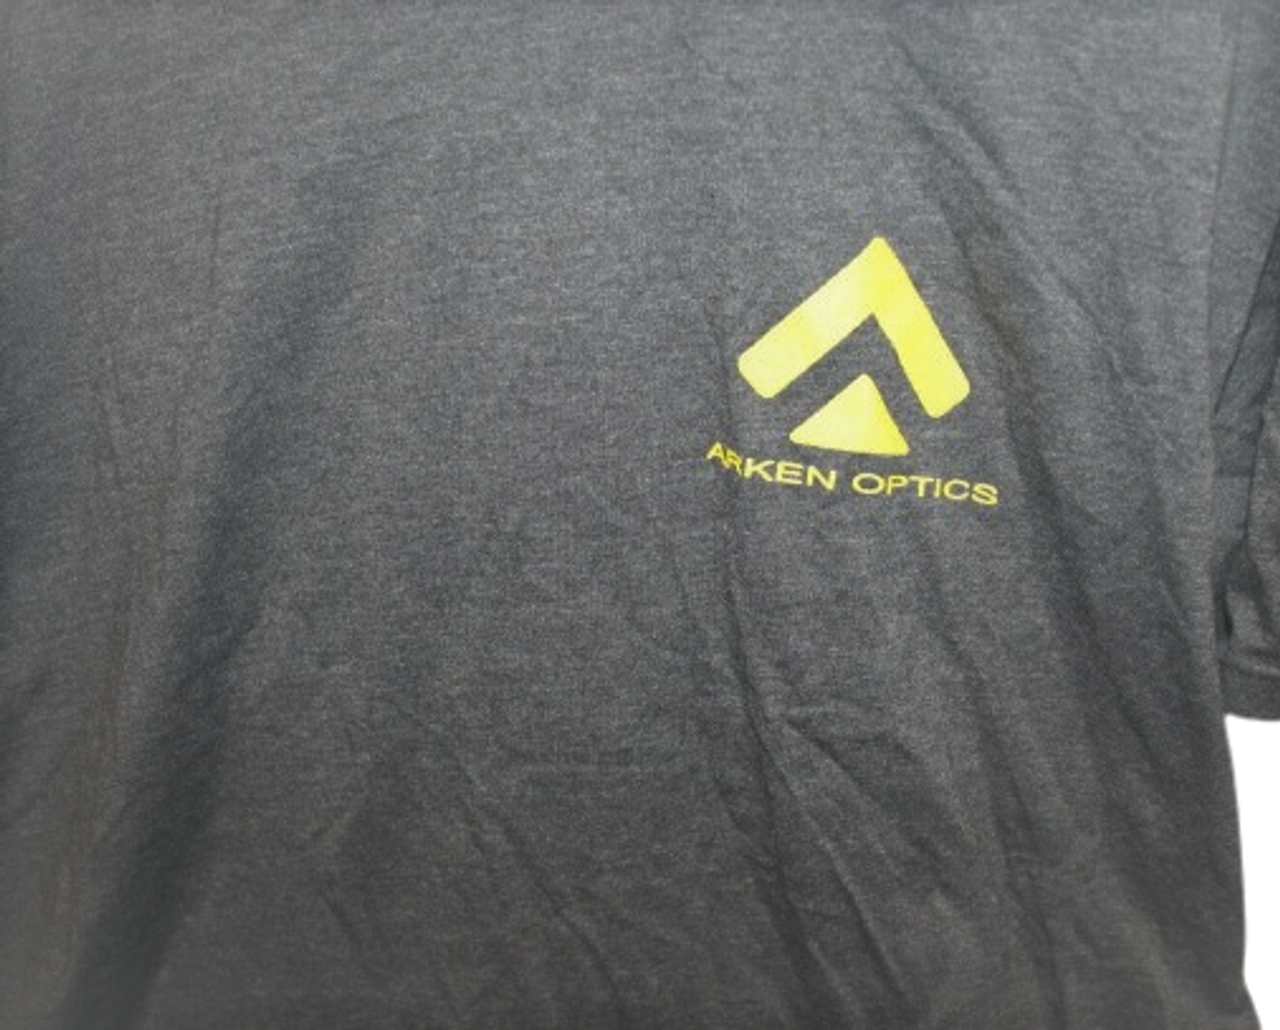 Arken Optics T-shirt in Gray